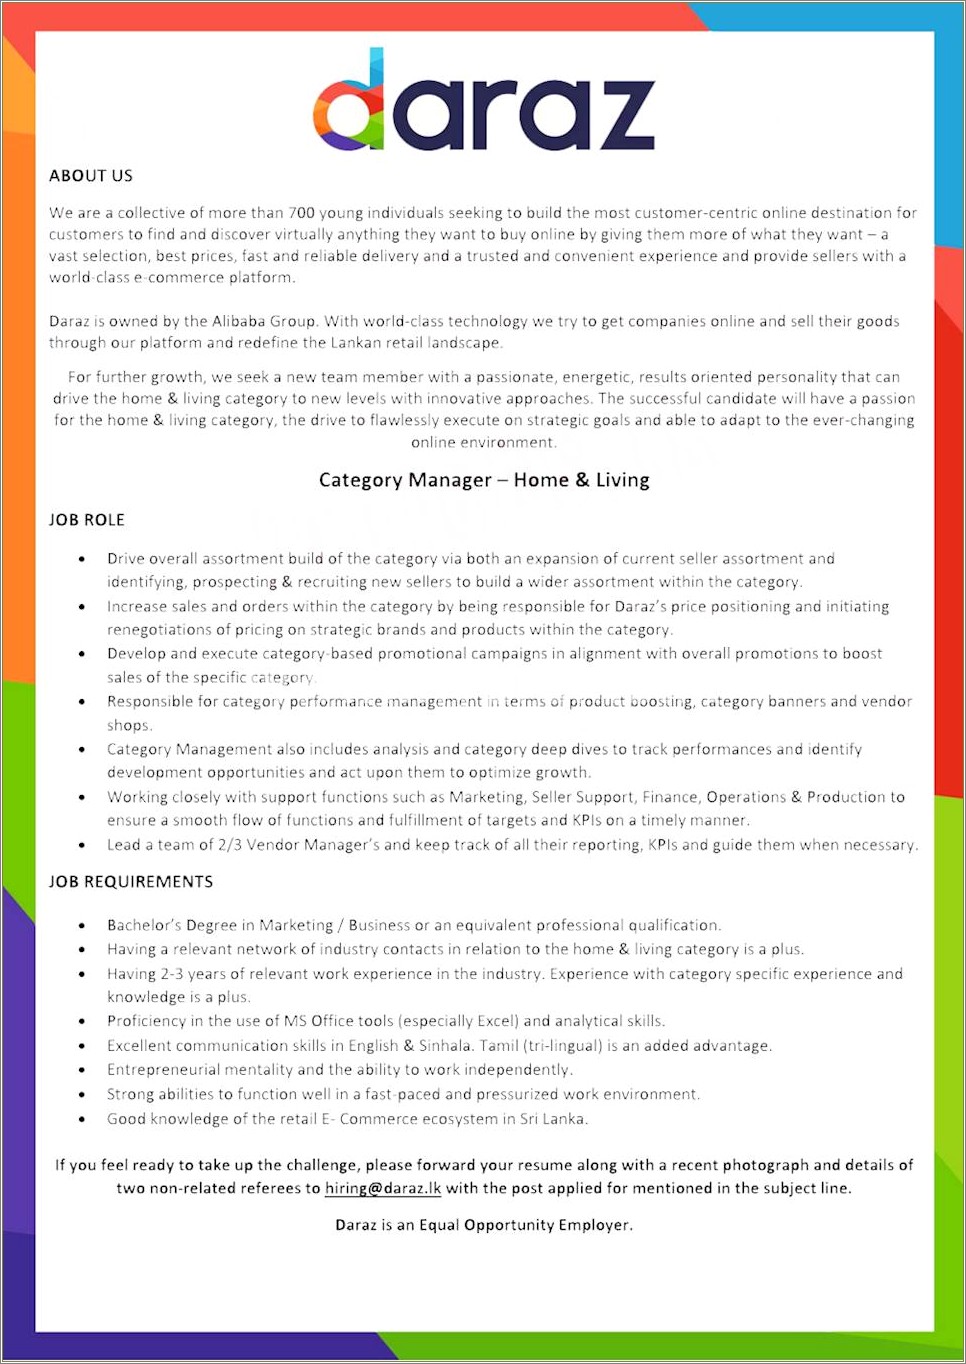 Category Manager Job Description For Resume